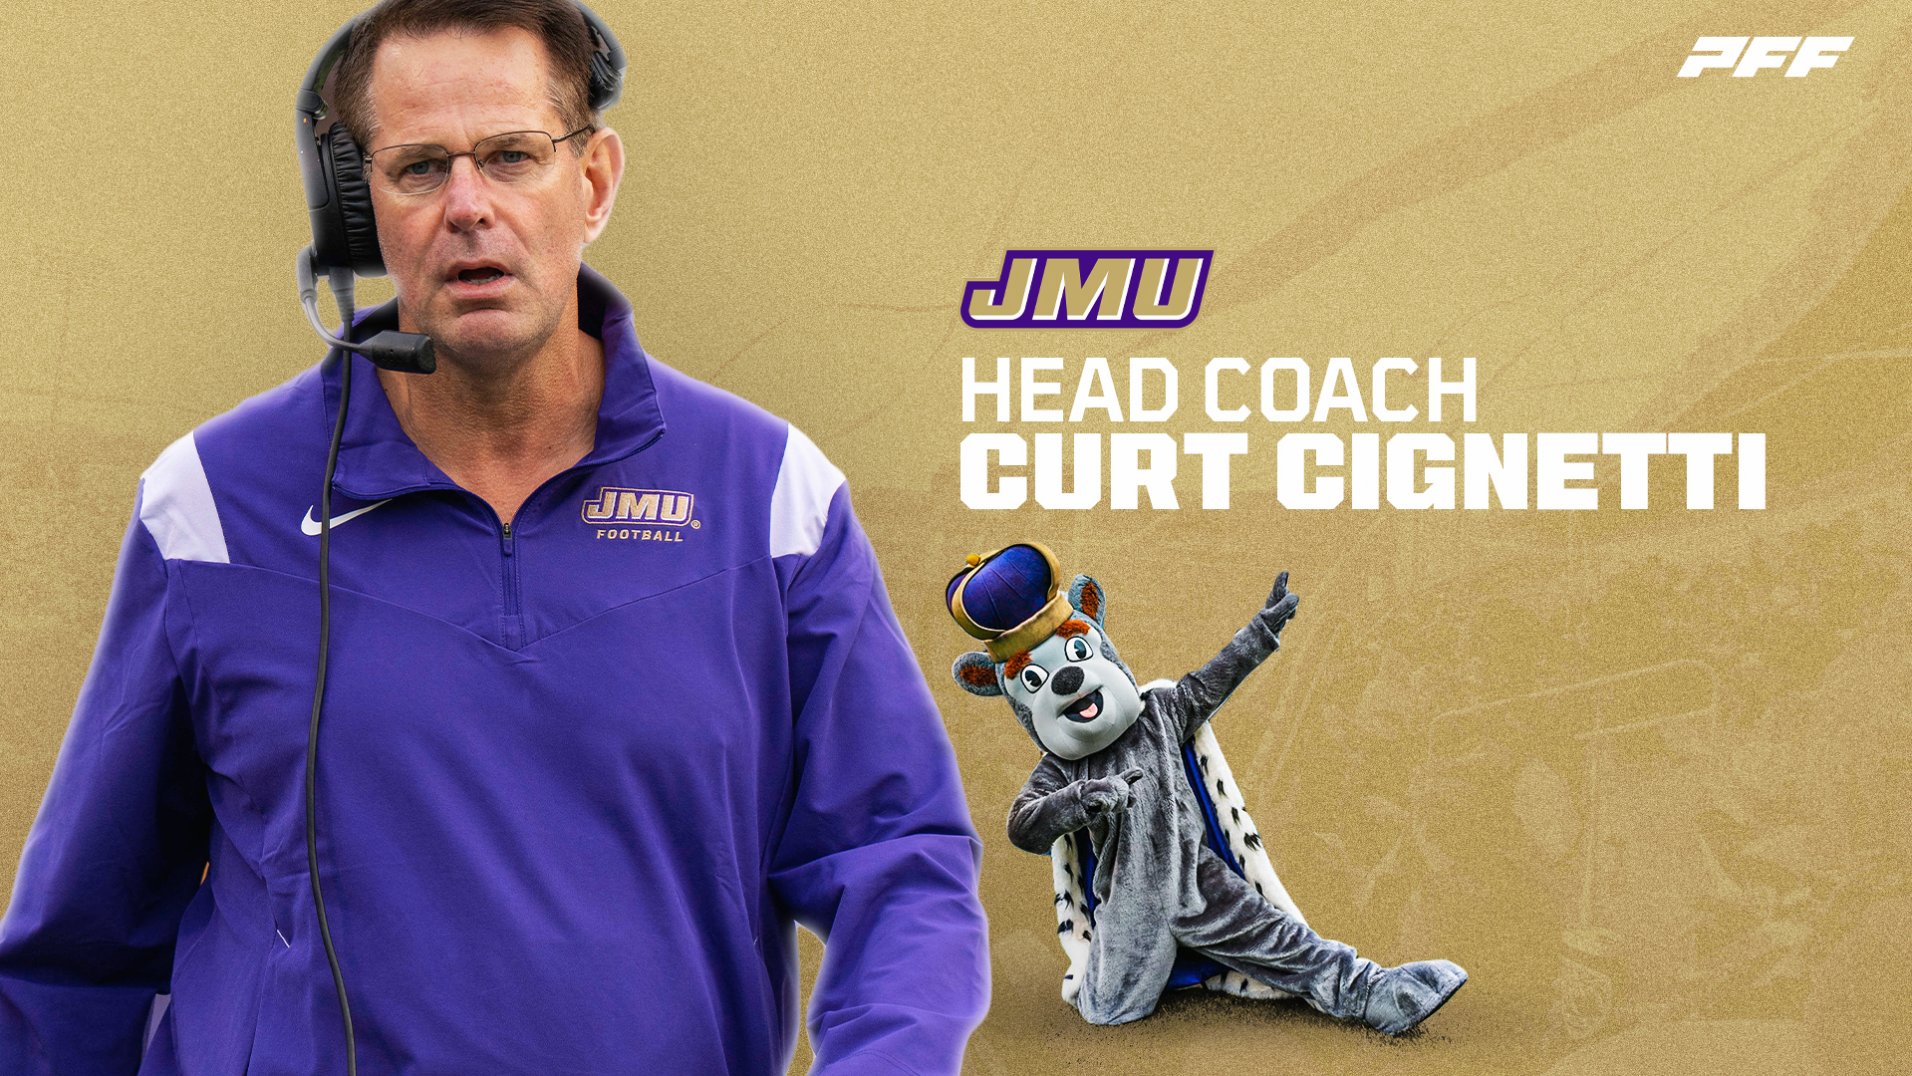 College Football JMU reaching new heights under head coach Curt